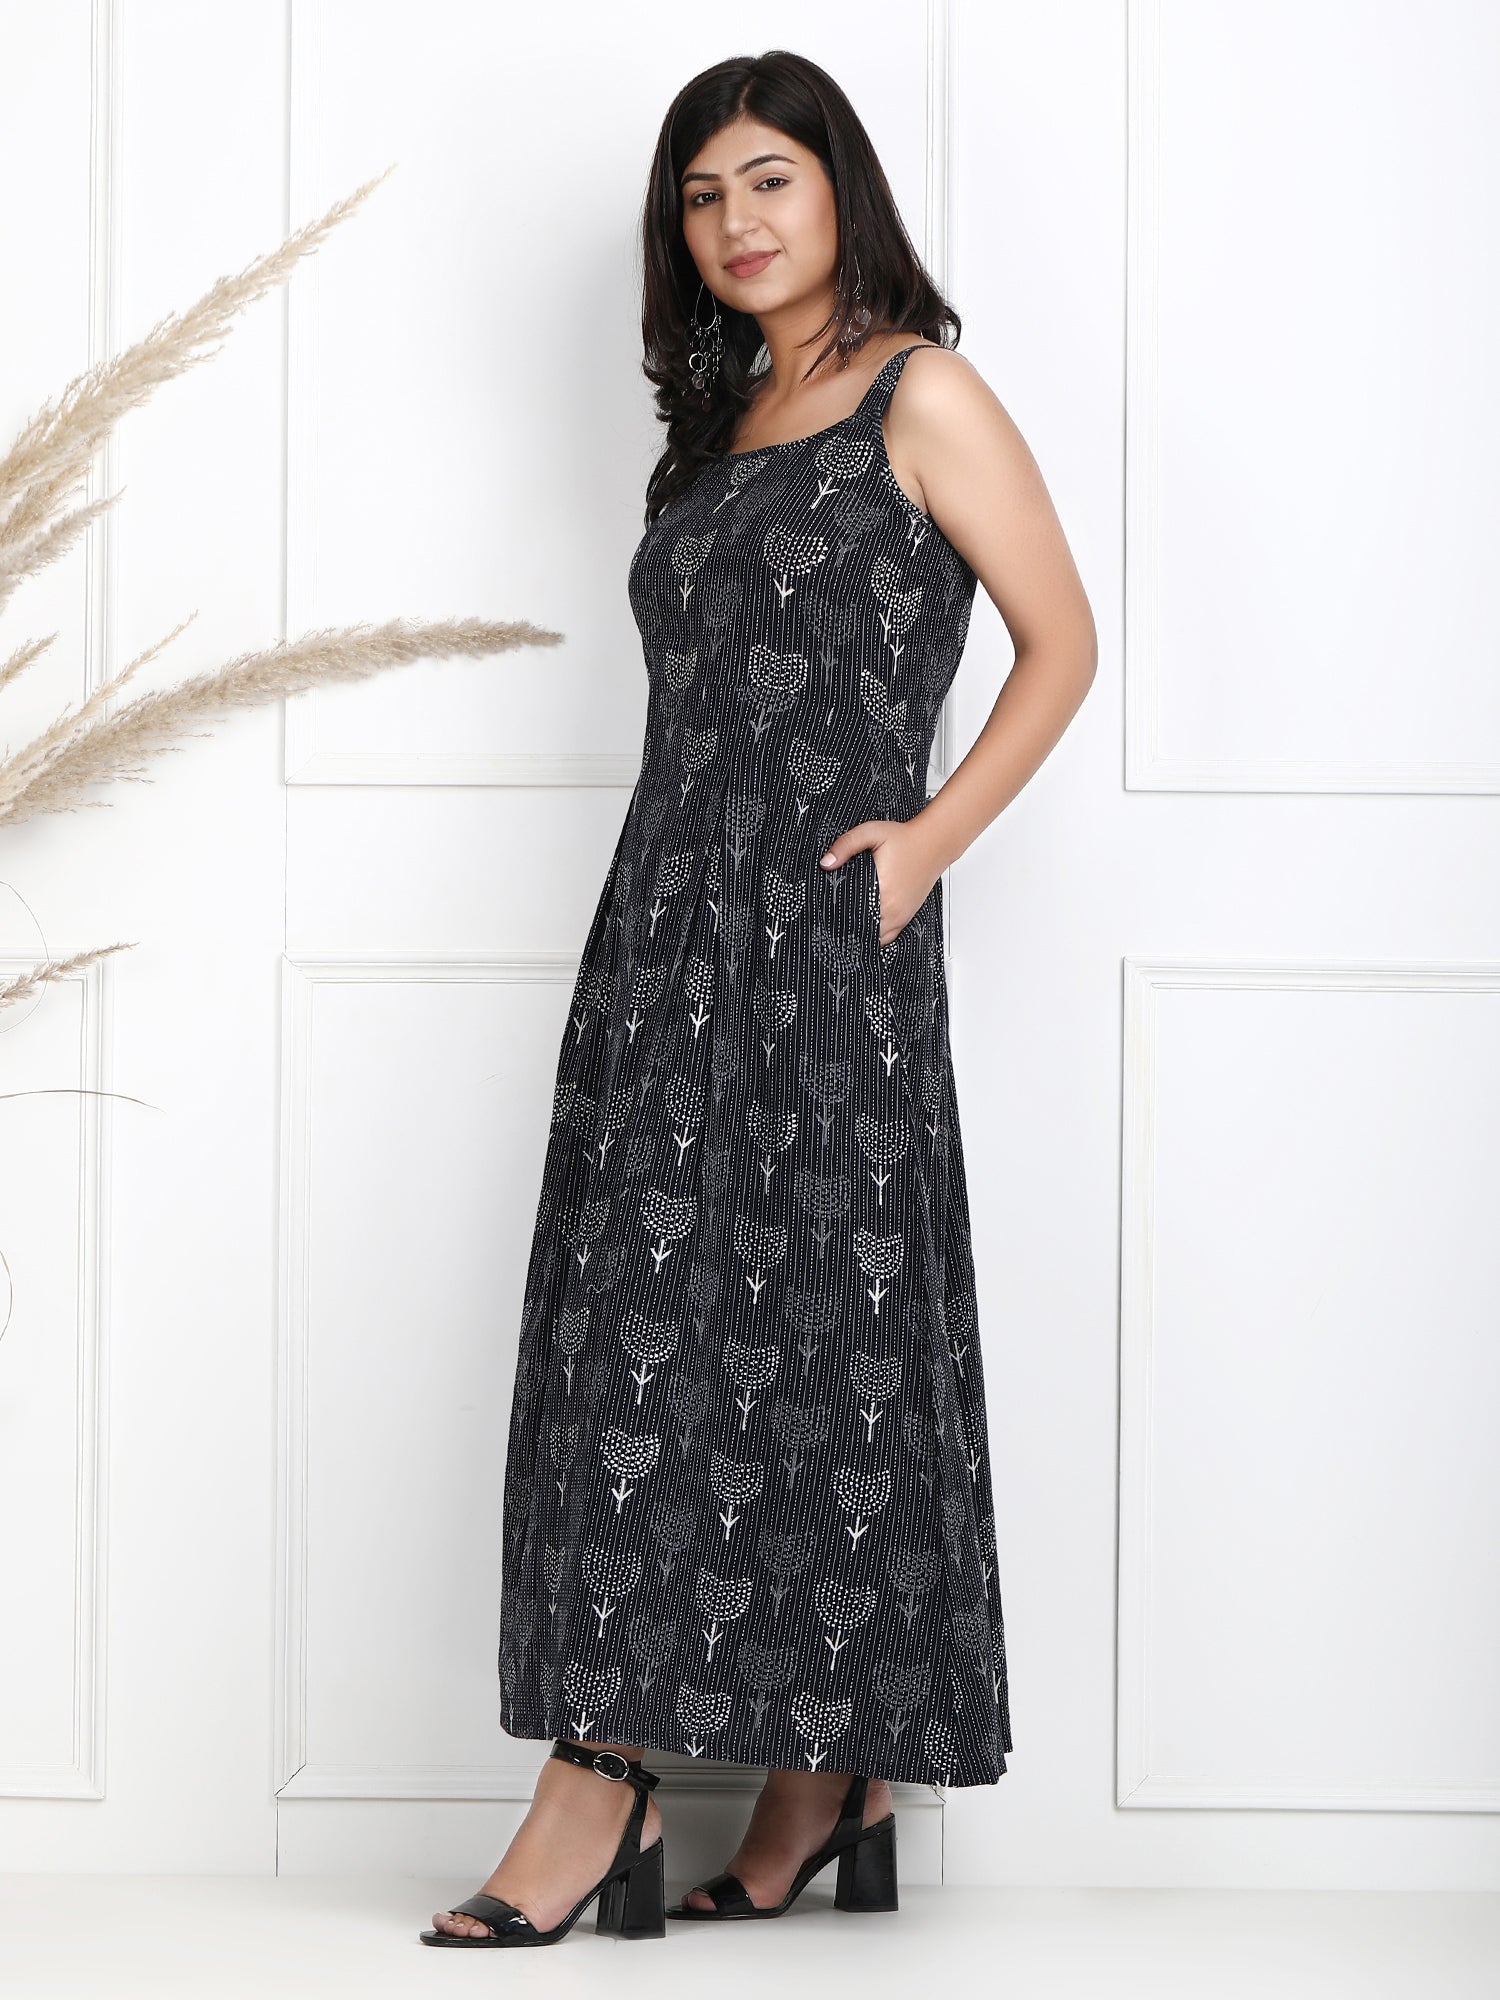 Darzaania black long dress online